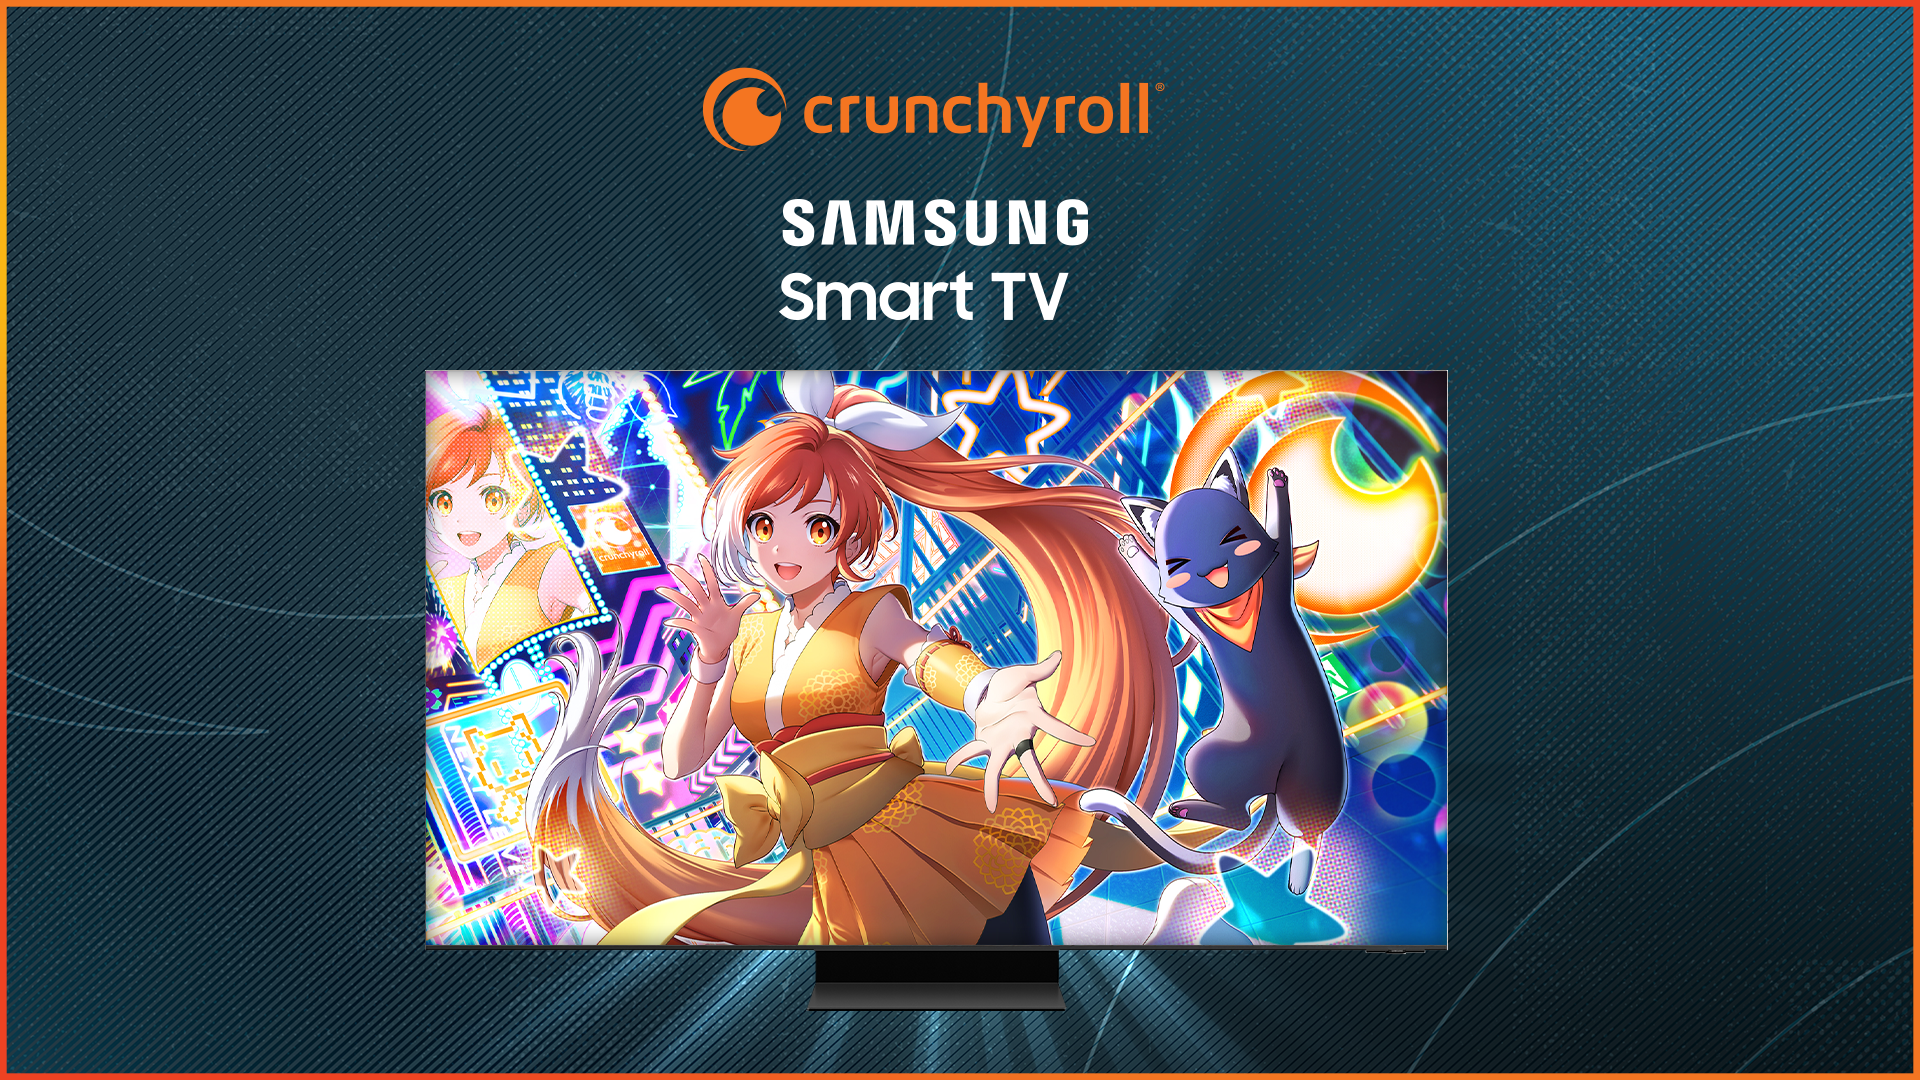 Crunchyroll app as seen on a Samsung TV